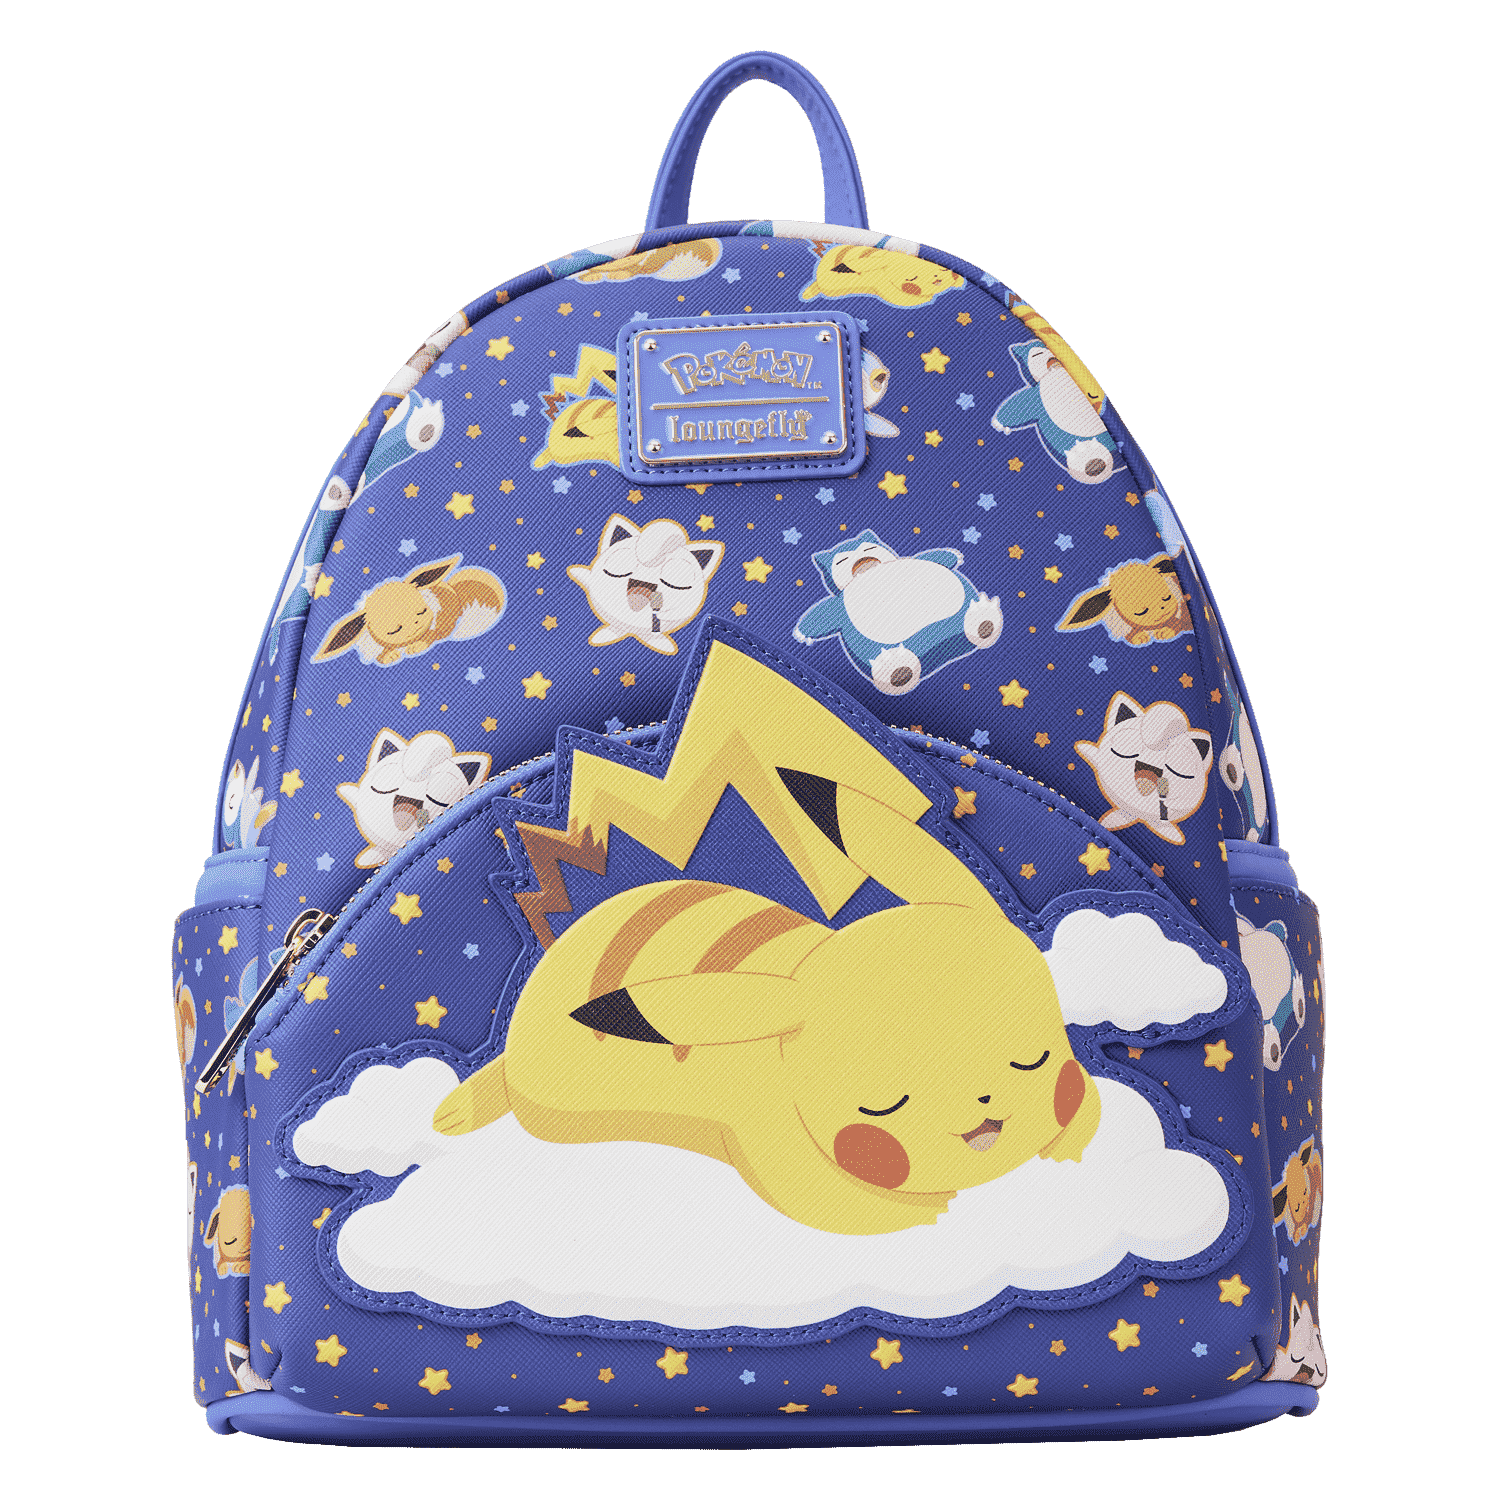 Pokemon - Sleeping Pikachu and Friends Mini Backpack